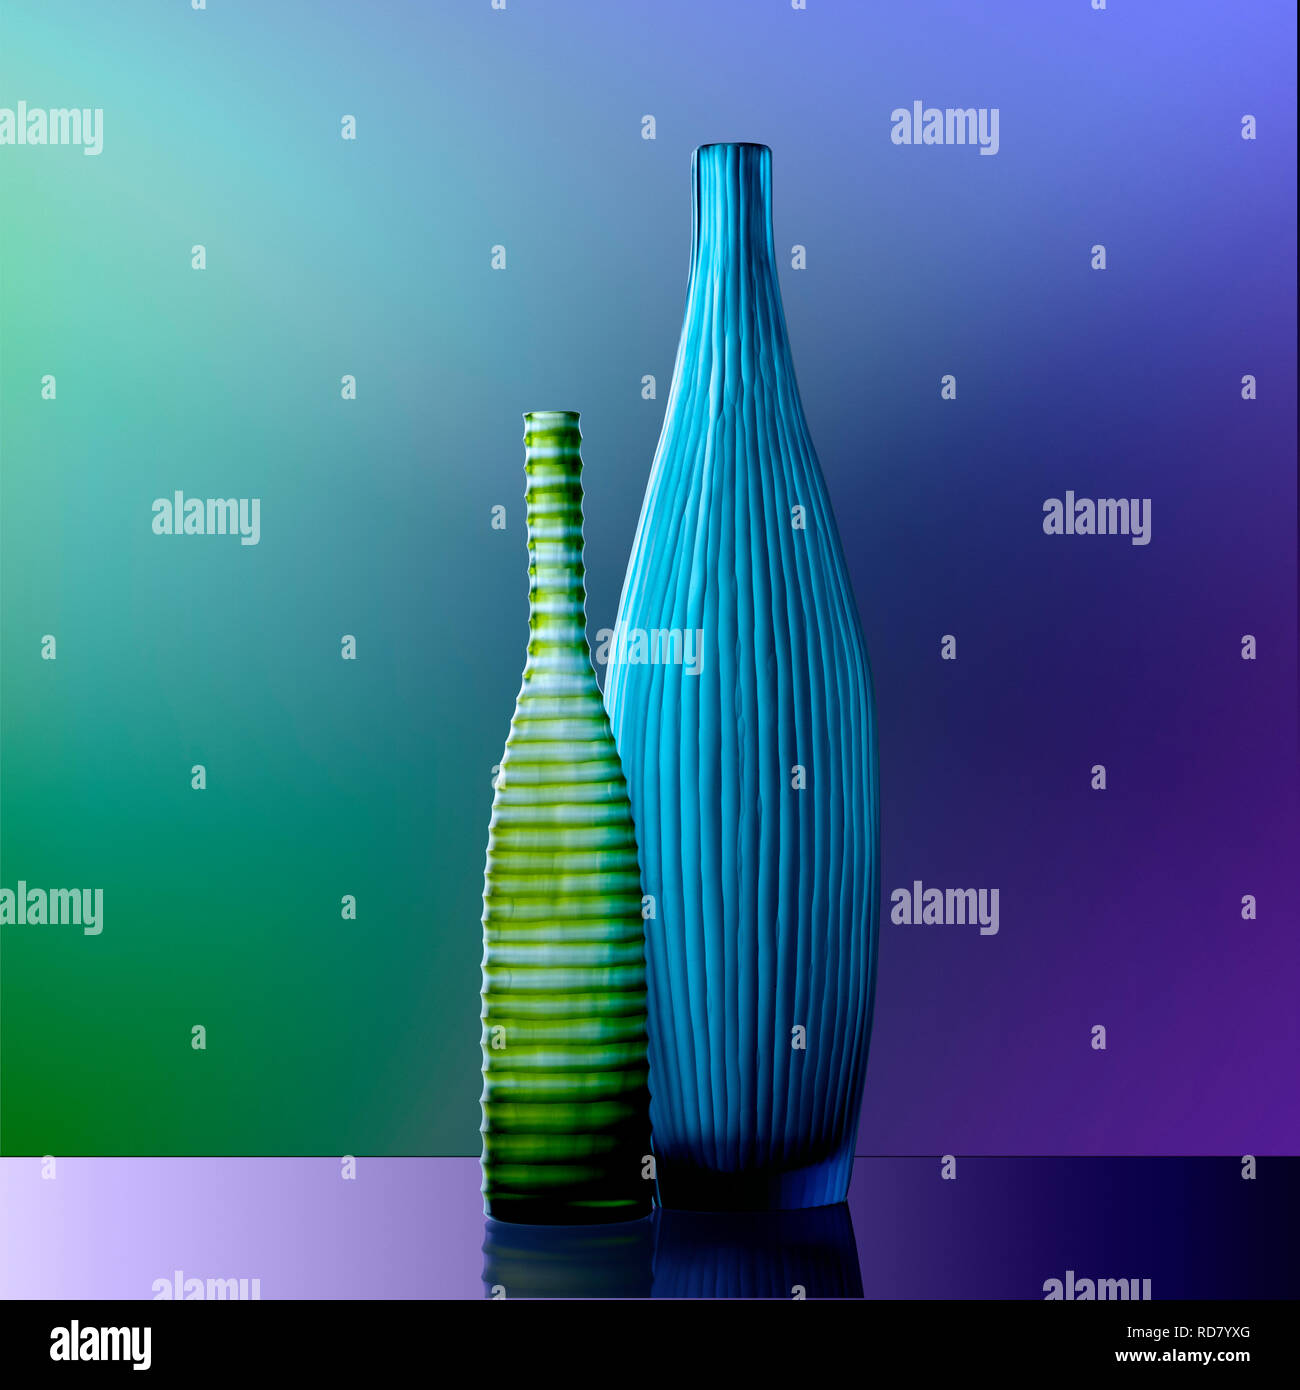 Green and blue glass bottles, studio shot Stock Photo